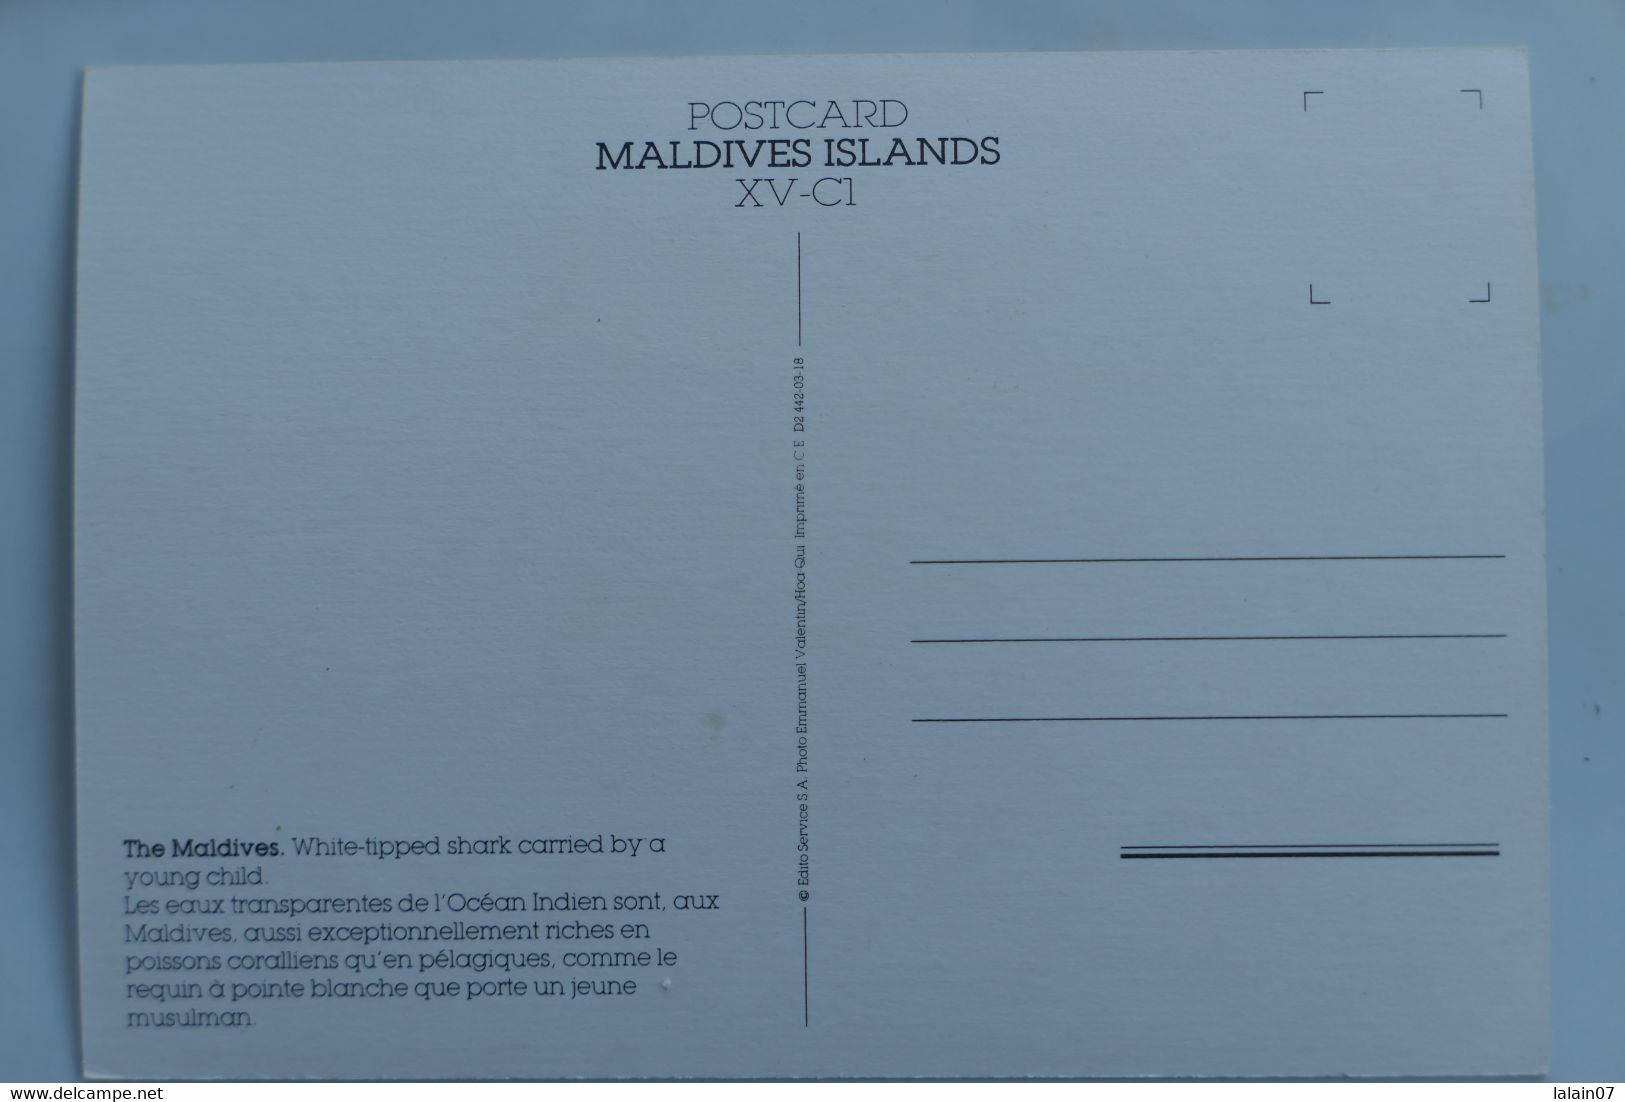 Carte Postale : Maldives Islands : White Tipped Shark Carried By A Young Child, Requin à Pointe Blanche Porté Un Jeune - Maldive